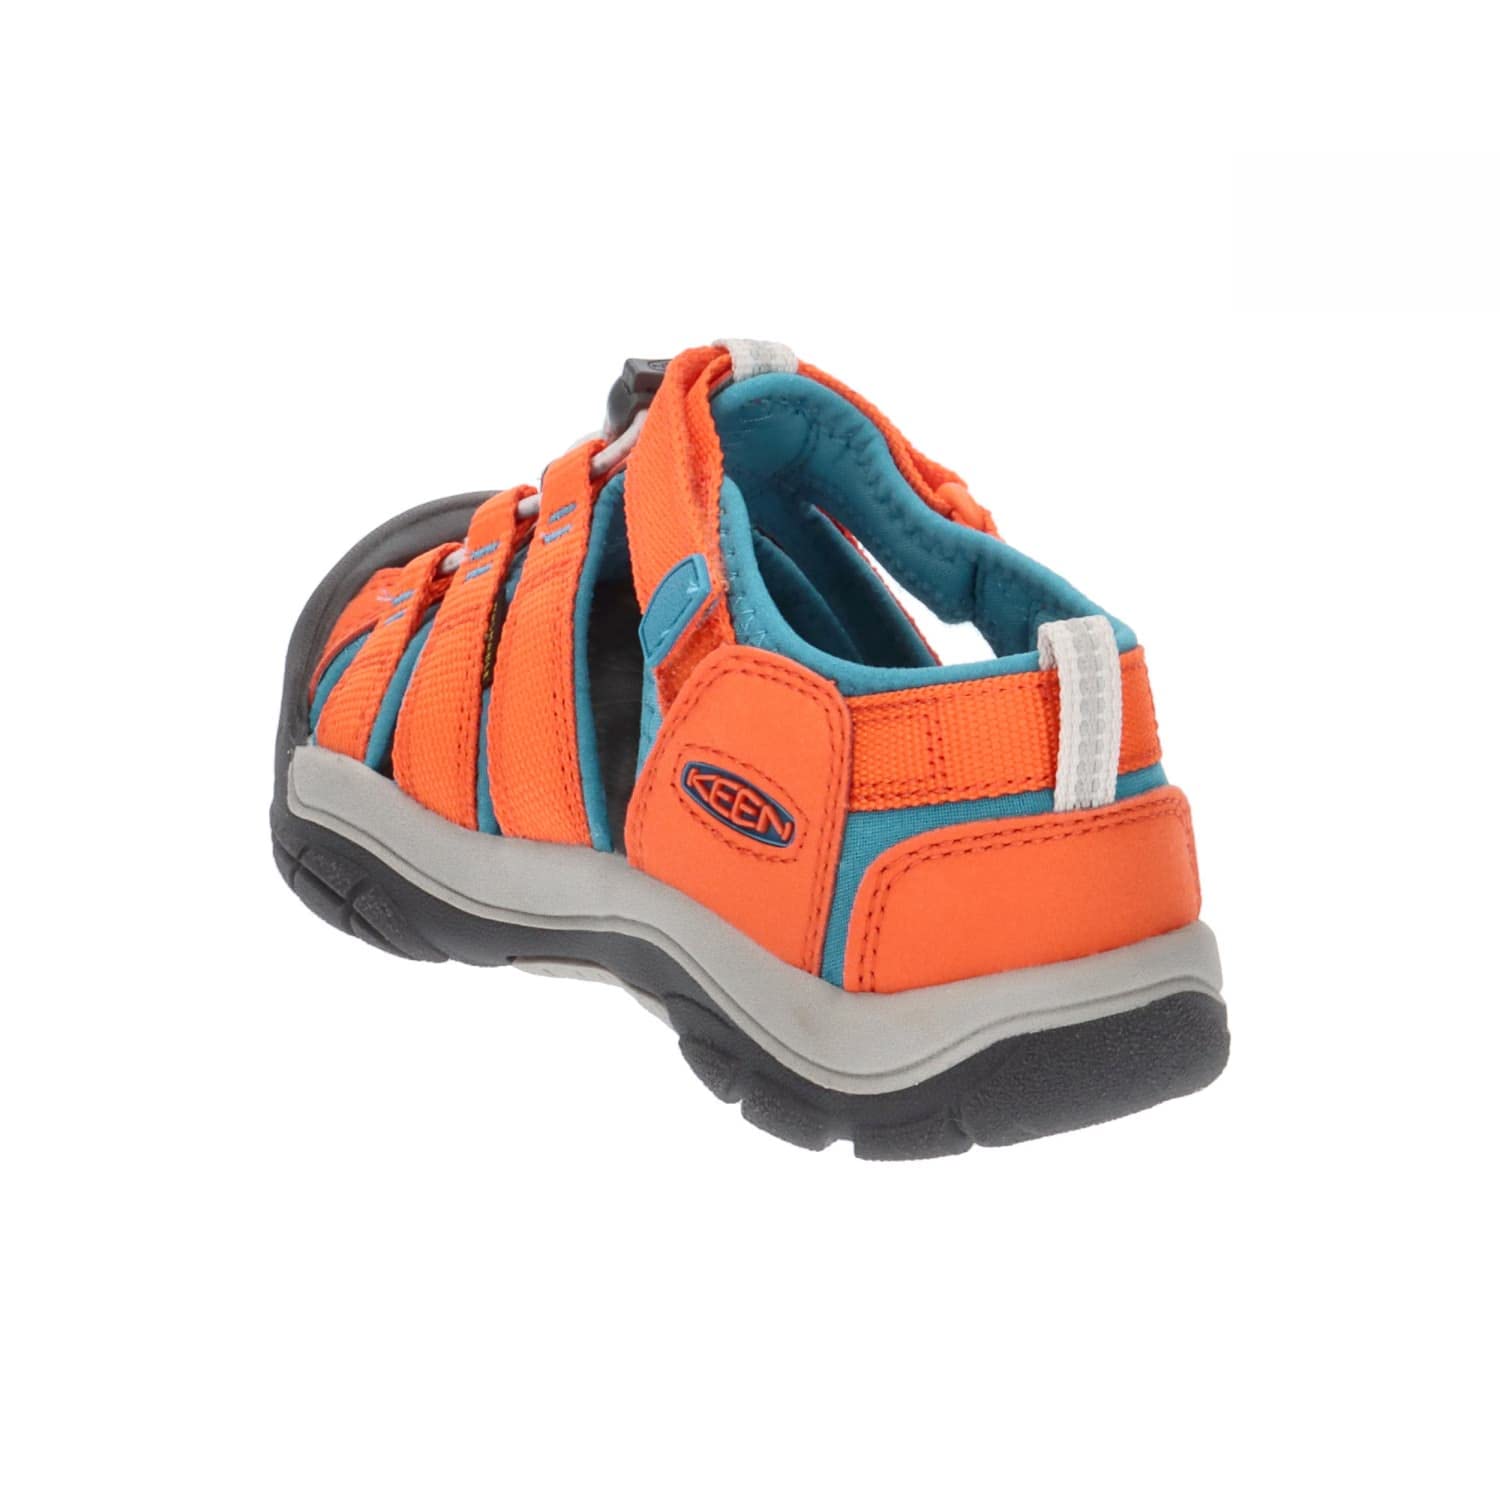 KEEN Newport H2 Closed Toe Water Sandals, Safety Orange/Fjord Blue, 2 US Unisex Big Kid